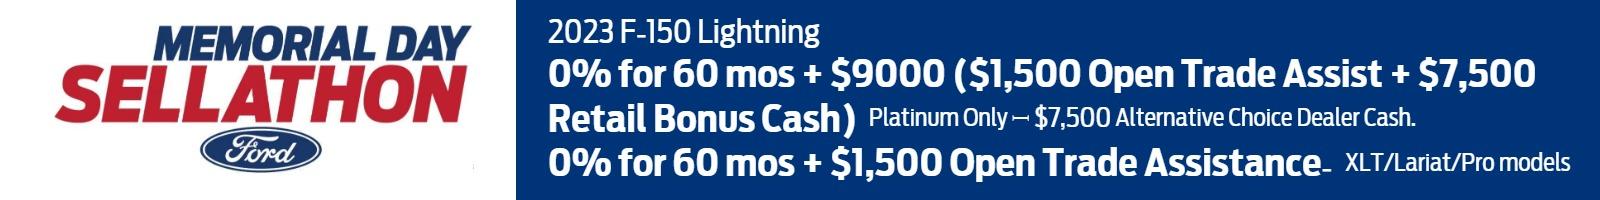 2023 F-150 Lightning
0% for 60 mos + $9000 ($1,500 Open Trade Assist + $7,500 Retail Bonus Cash) – Platinum Only ꟷ $7,500 Alternative Choice Dealer Cash.
0% for 60 mos + $1,500 Open Trade Assistance - XLT/Lariat/Pro models